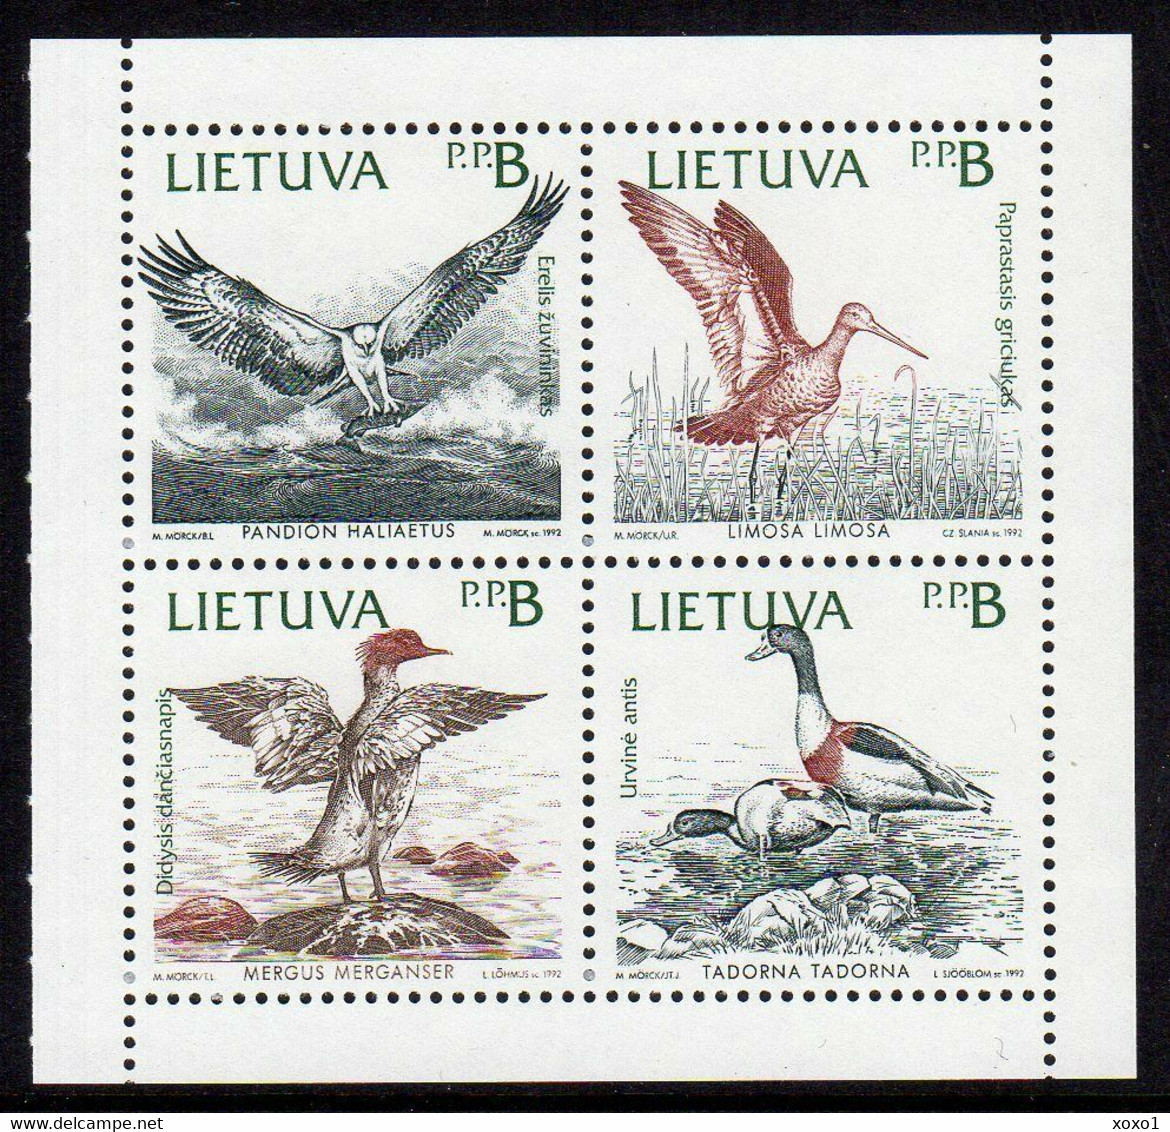 Lithuania 1992 MiNr. 501-4 Litauen Joint Issues BIRDS Osprey, Black-tailed Godwit, Merganser, Shelduck 4v Mnh ** 2.50 € - Litauen